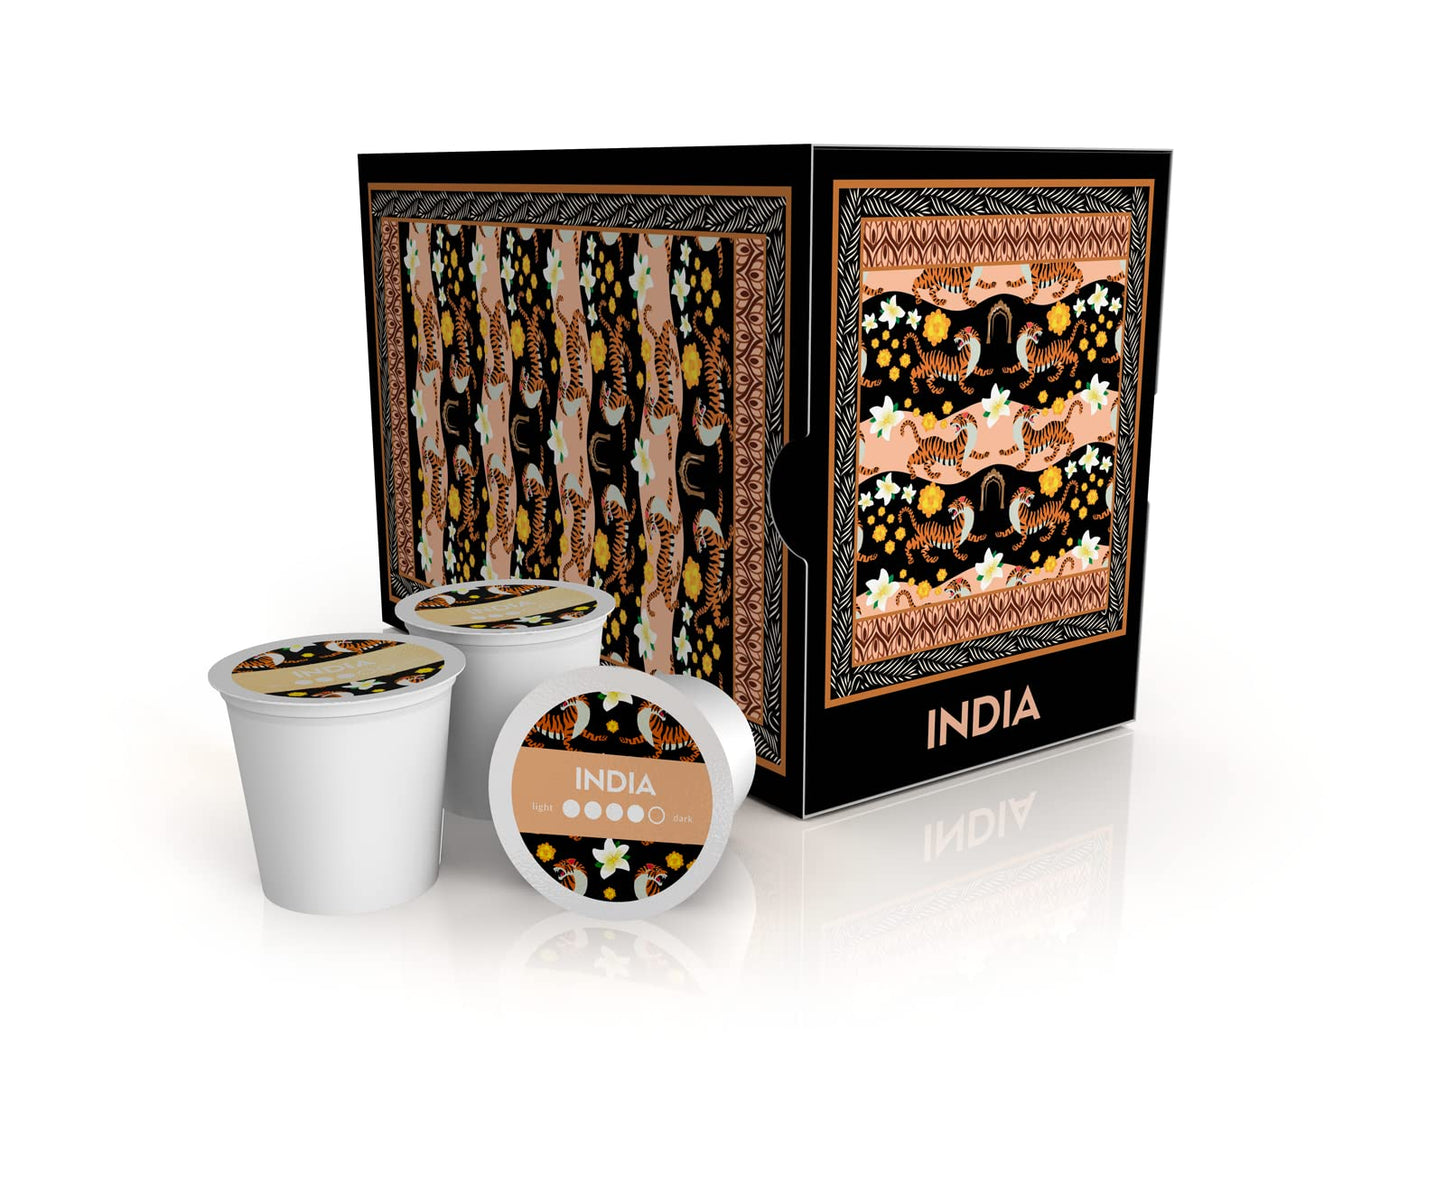 Atlas Coffee Club Guatemala Medium Roast Coffee, 100% Recyclable Single Origin Premium Coffee Pods for K Cup 1.0 & 2.0 Brewers, 24ct Box